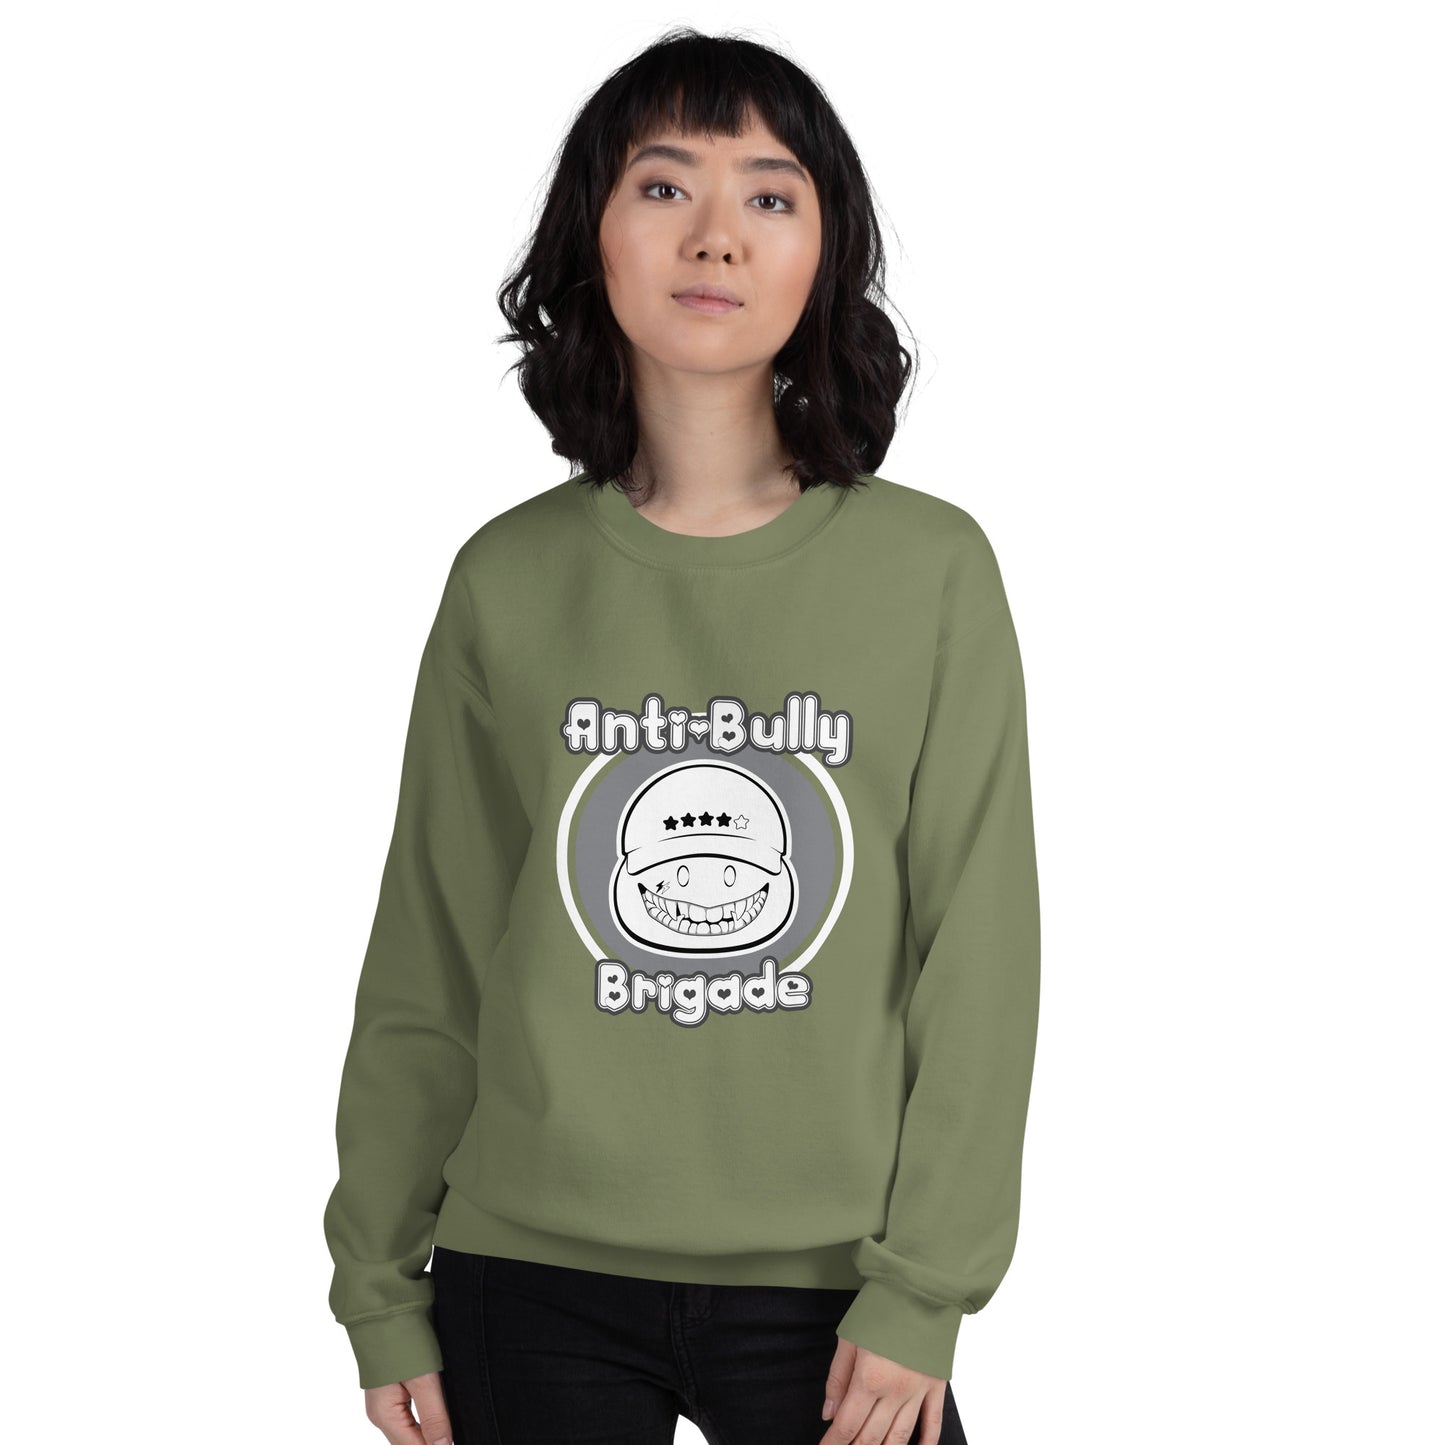 Anti-Bully Brigade - Unisex Sweatshirt